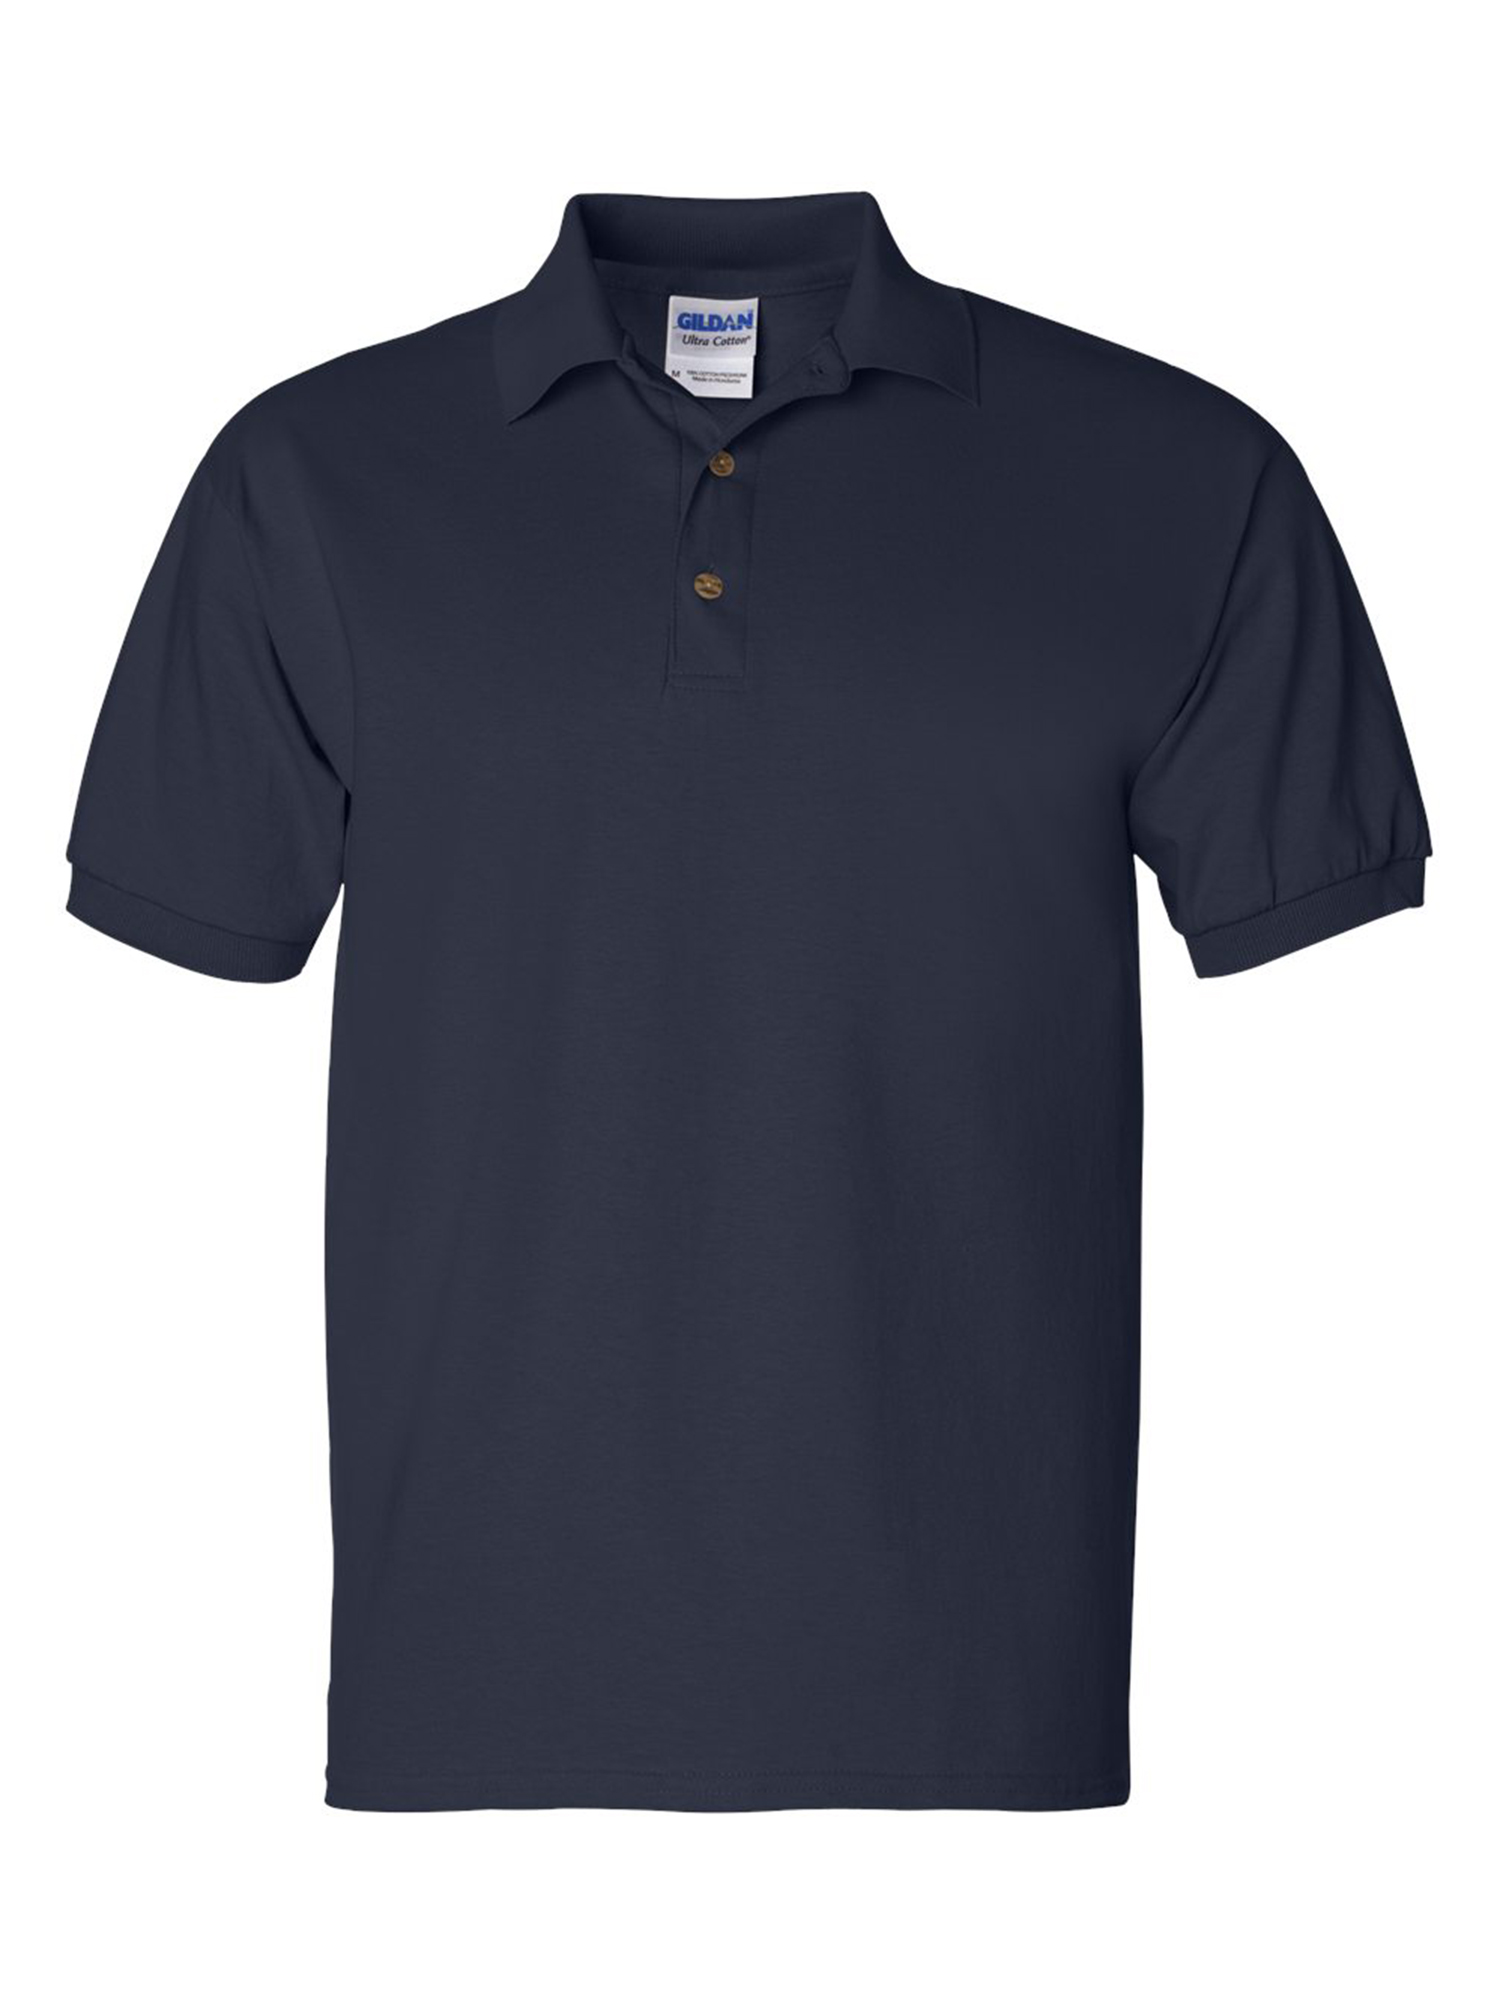 Navy Shirts for Men Polo Shirts for Men Gildan Ultra Cotton Jersey Sport Shirt 2800 S M L XL 2XL Button Down T Shirts for Mens Polo Shirts with Colors Business Casual School - image 1 of 2